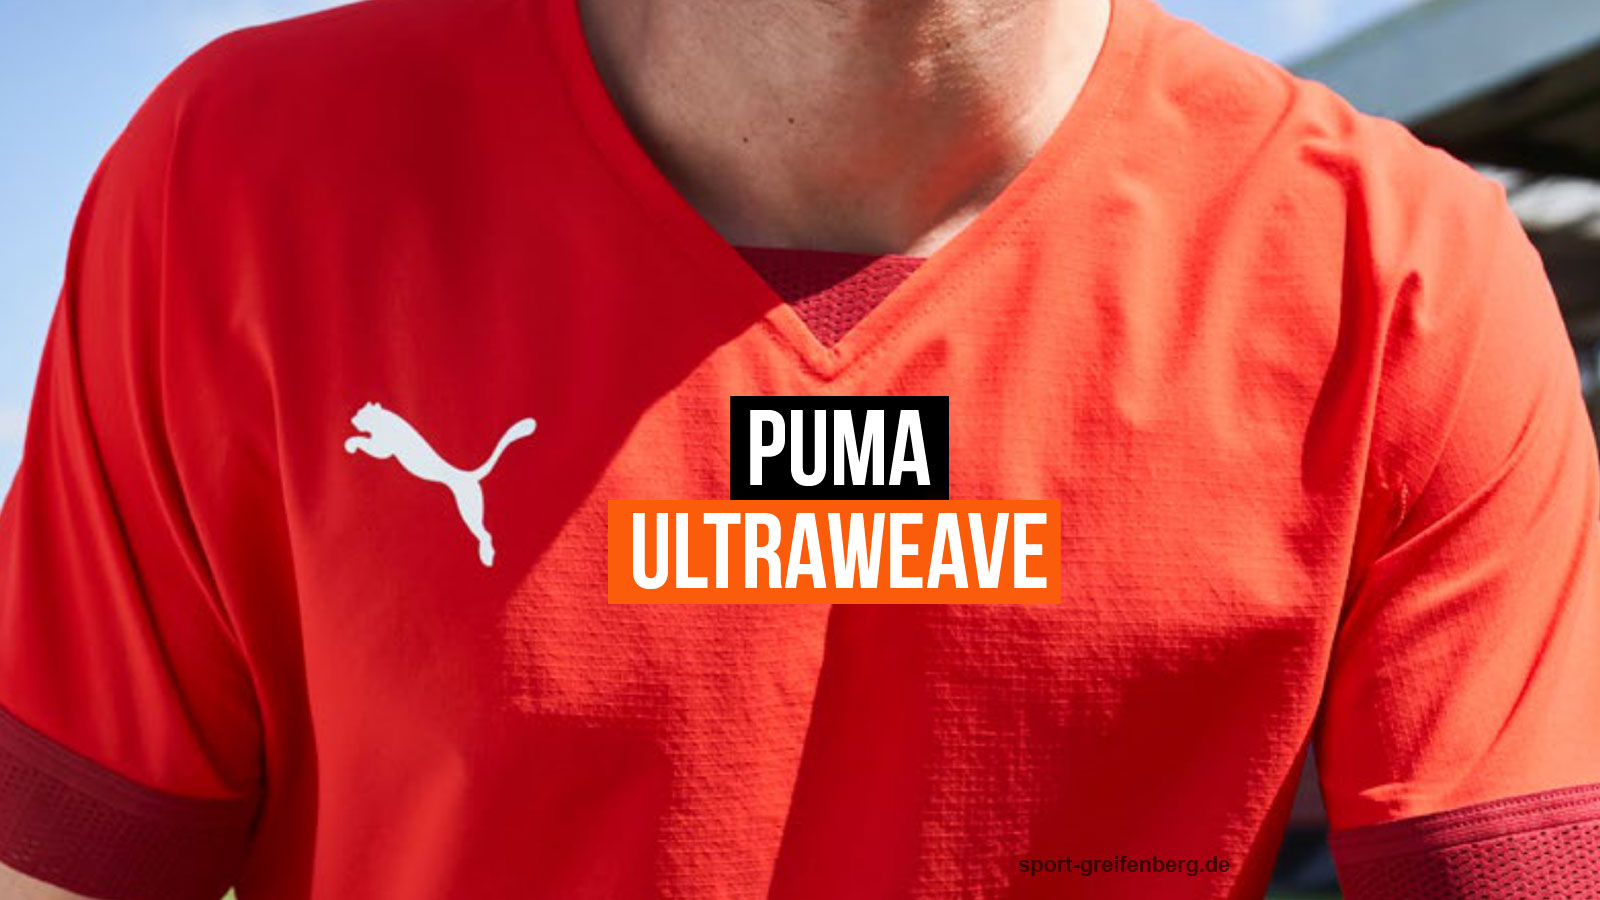 Die Puma Trikots mit Ultraweave Material